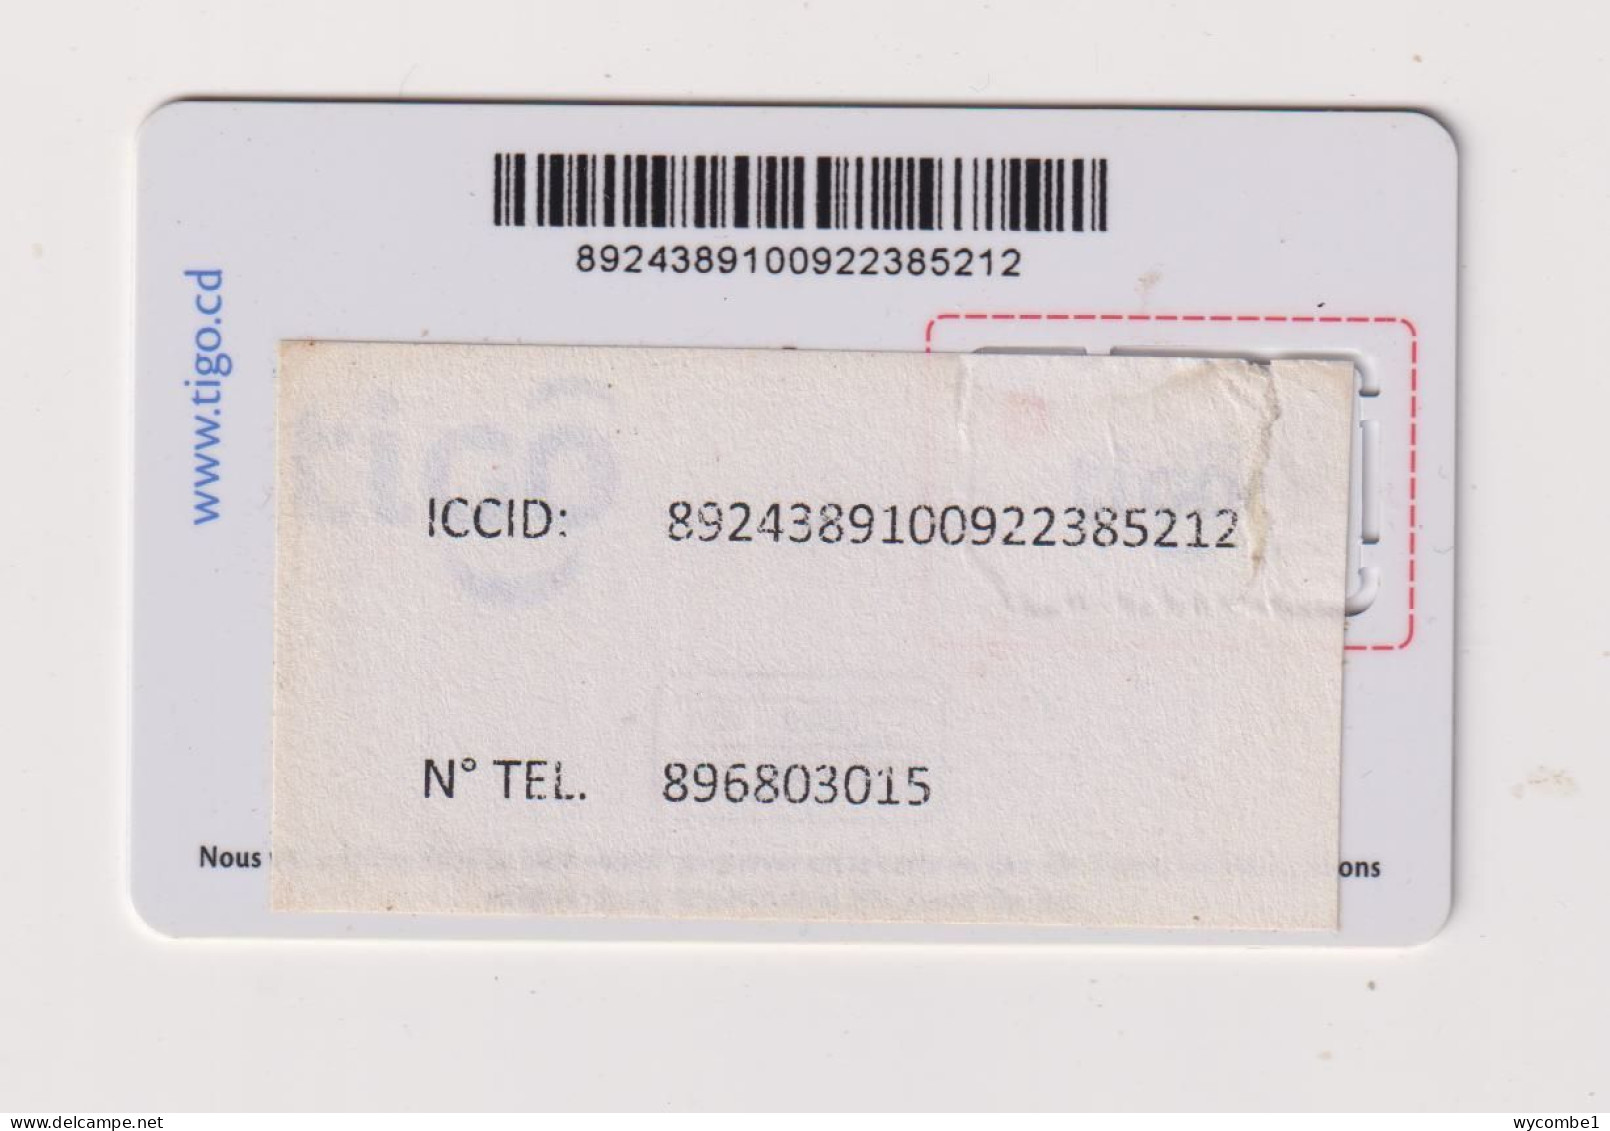 CONGO DR (Kinshasa) - Tigo Unused Chip SIM Phonecard - Kongo